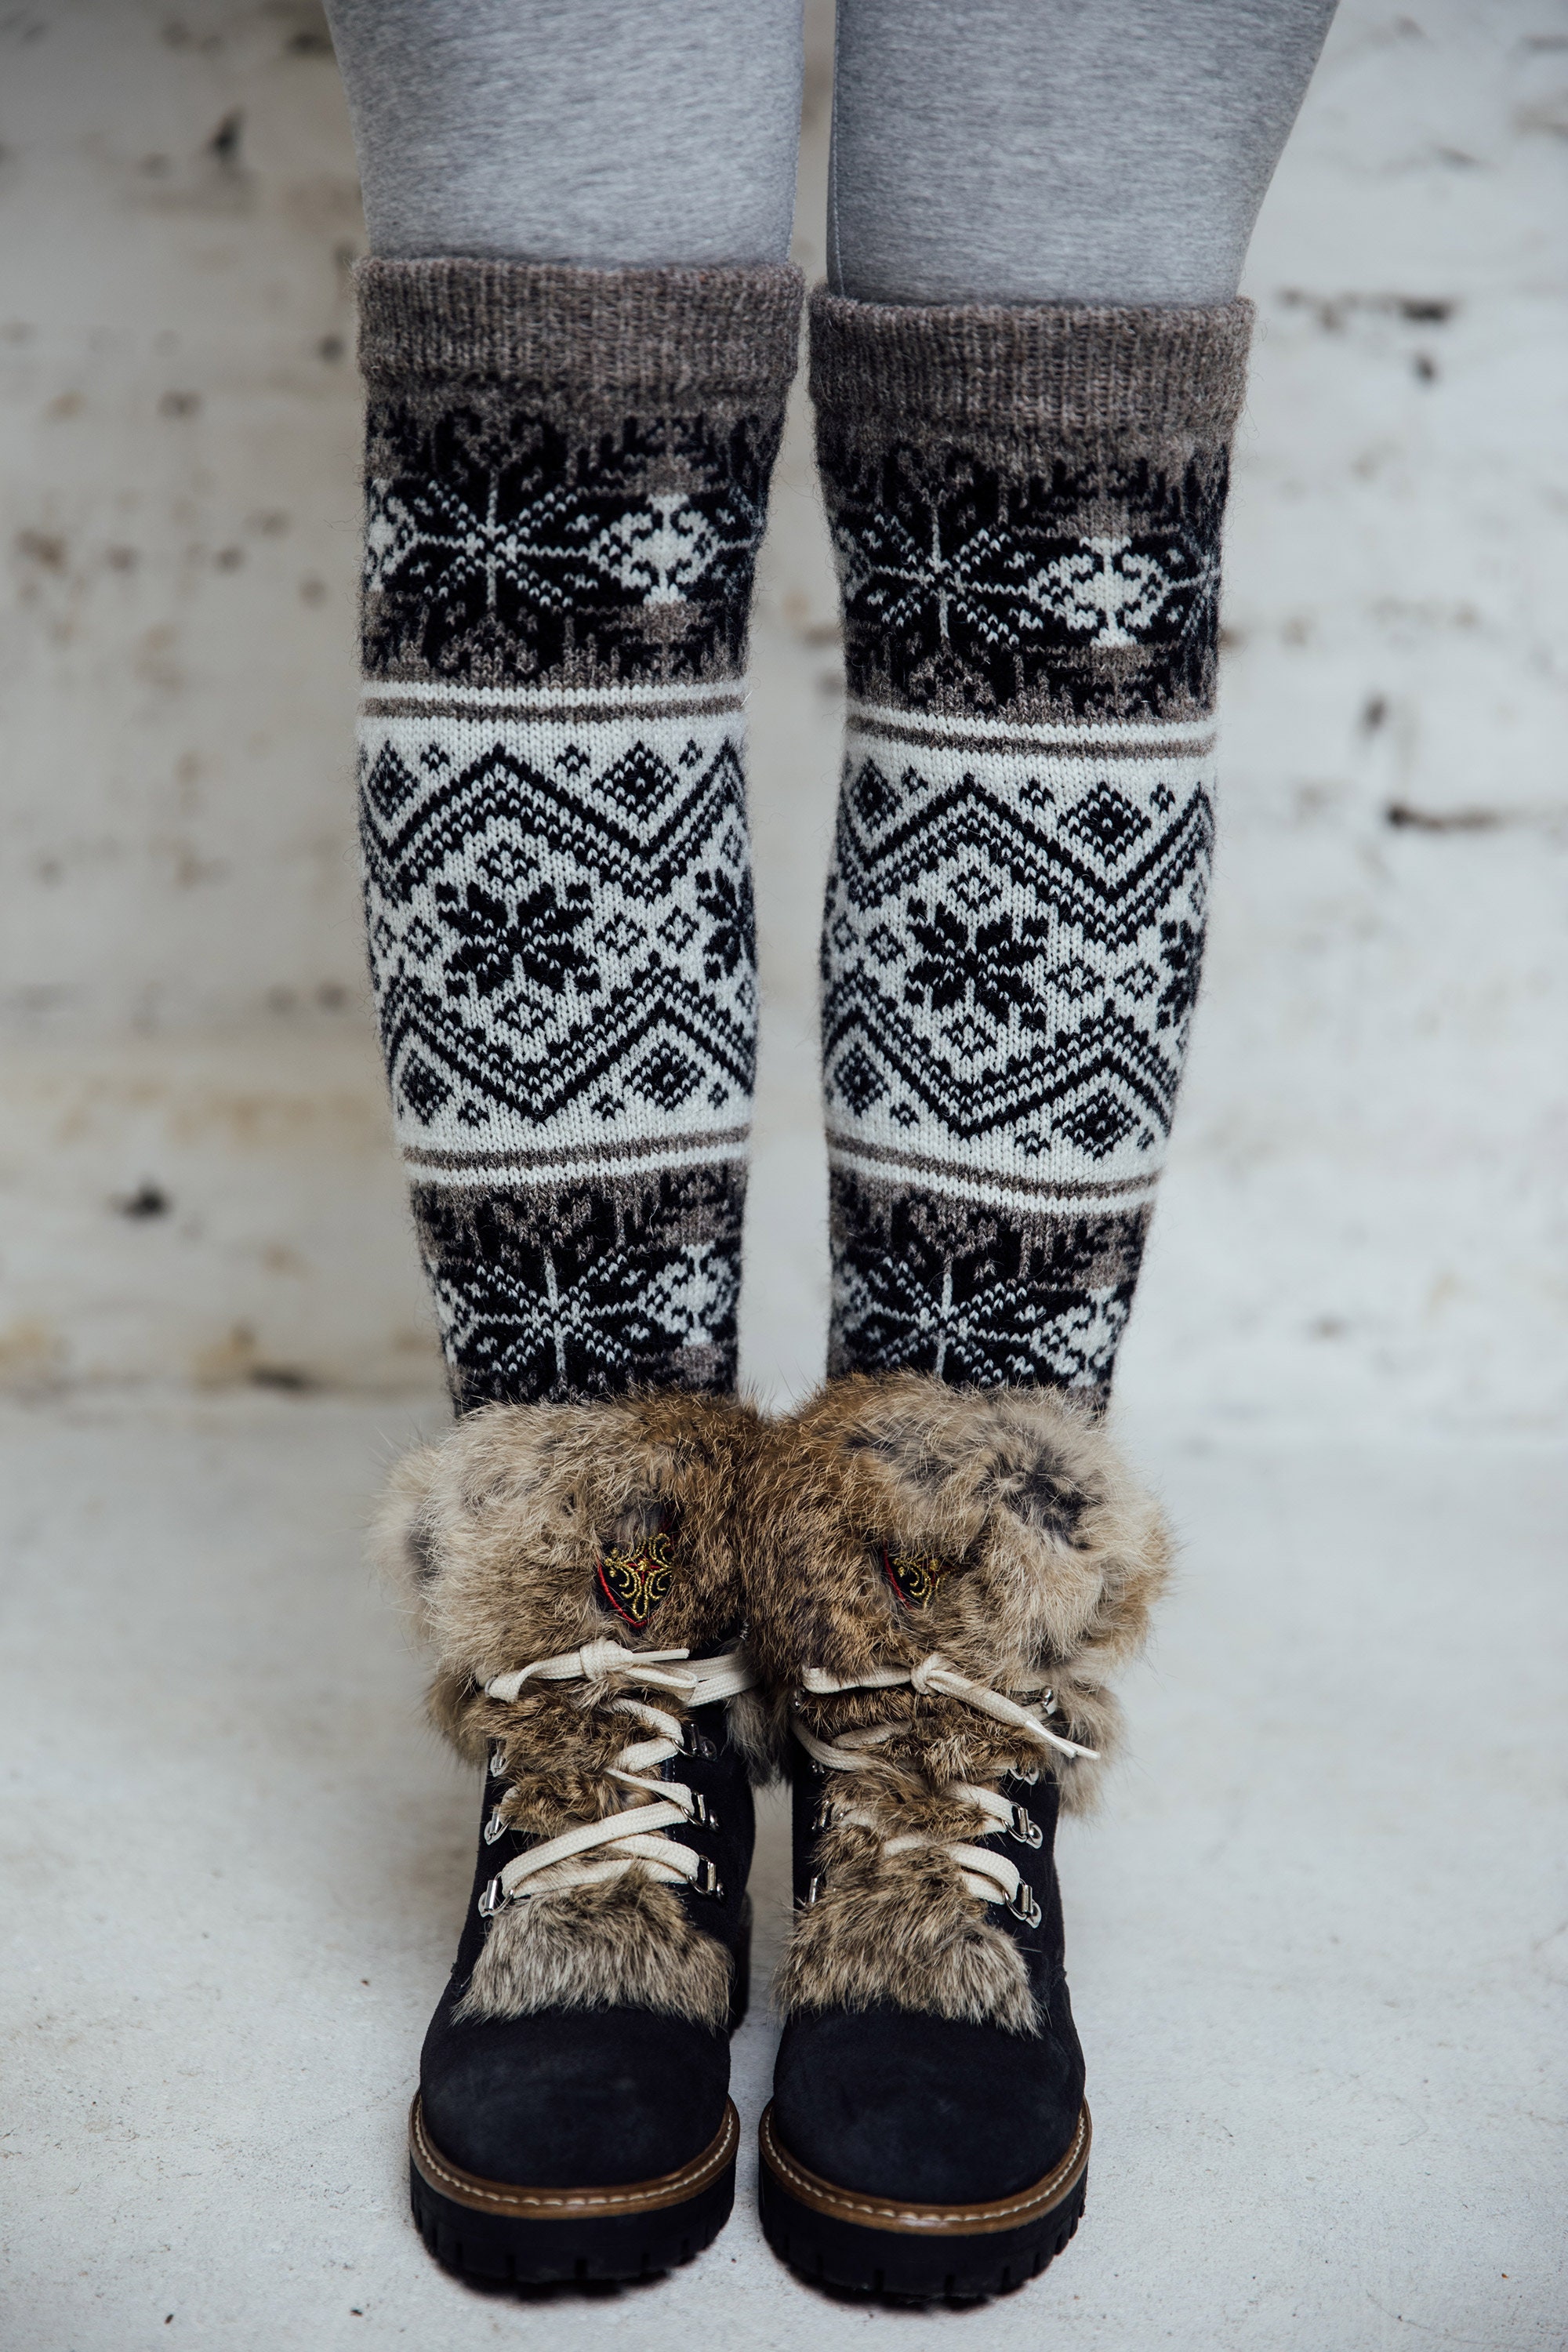 Head Ski Socks V-Shape - Calcetines de esquí, Comprar online